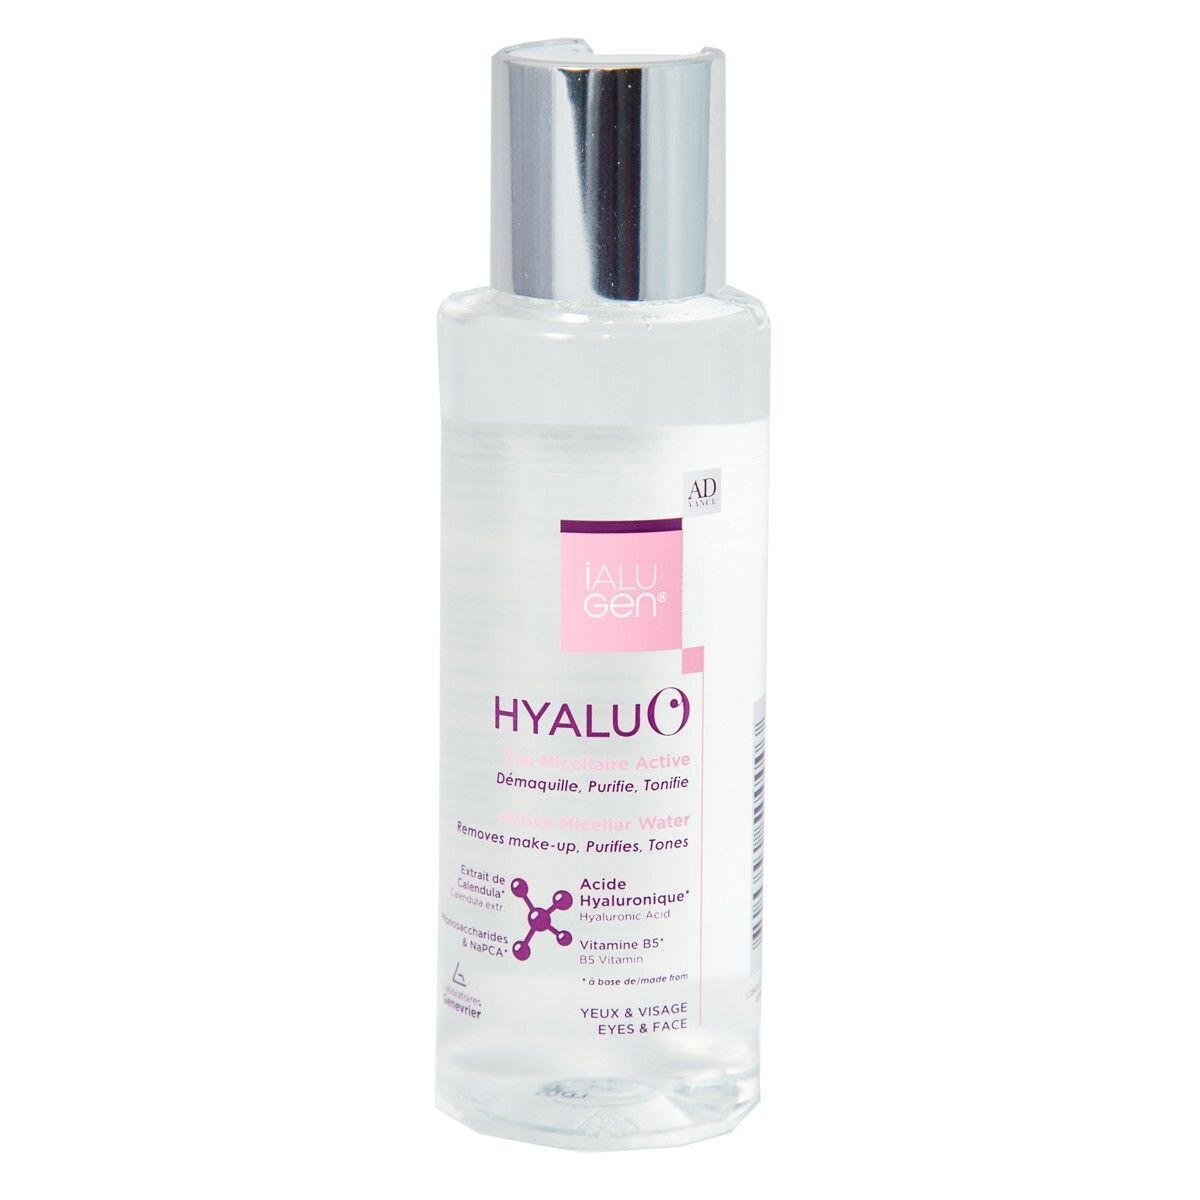 HYALU'O ACTIVE micellar water